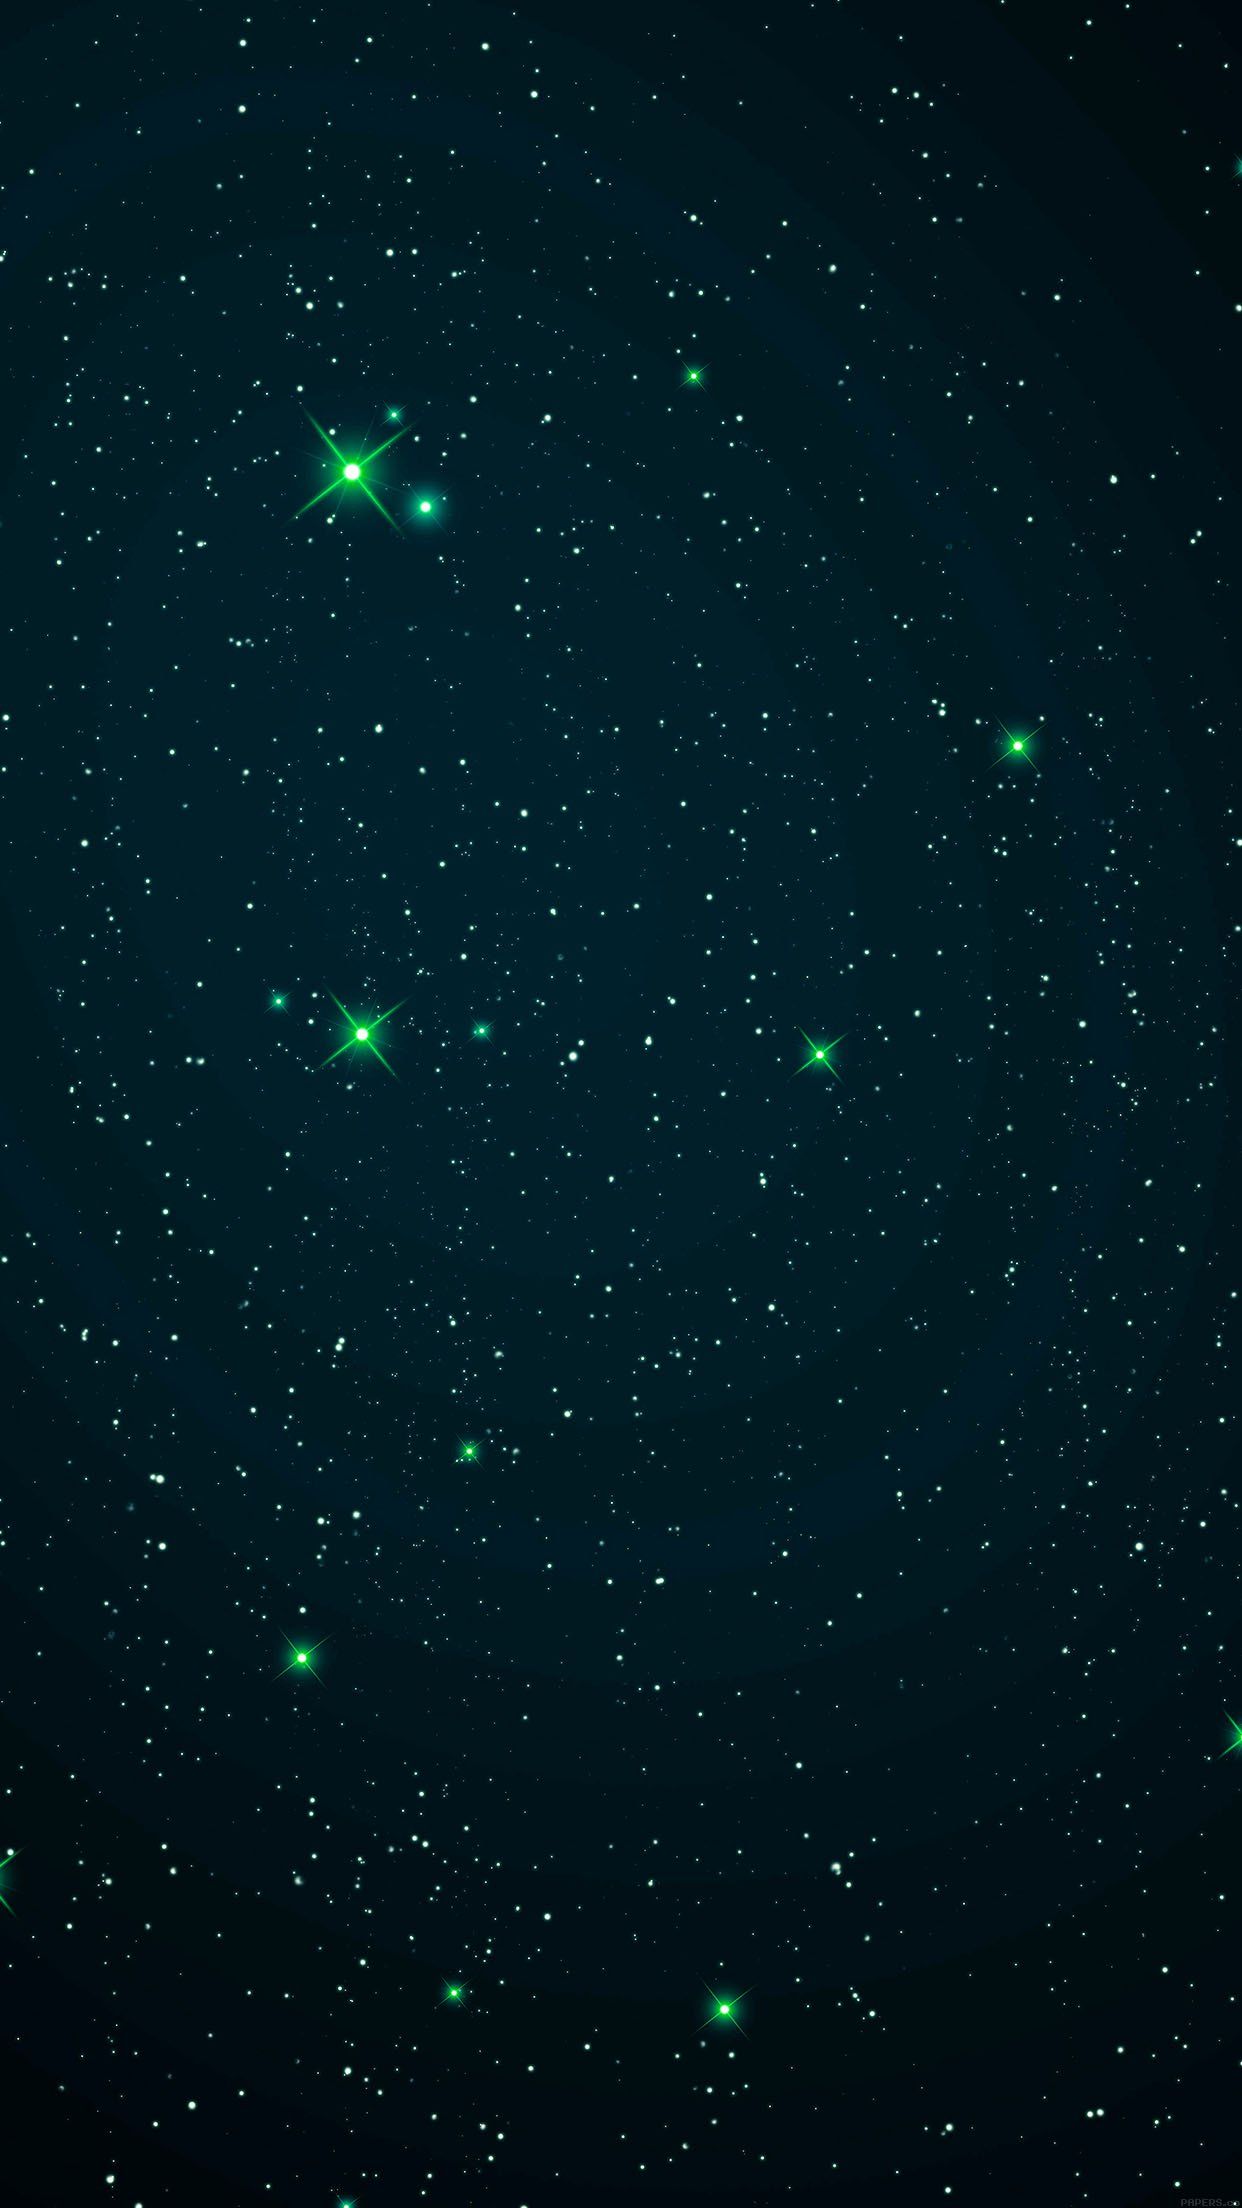 ac02-wallpaper-space-star-night-dark-green-wallpaper